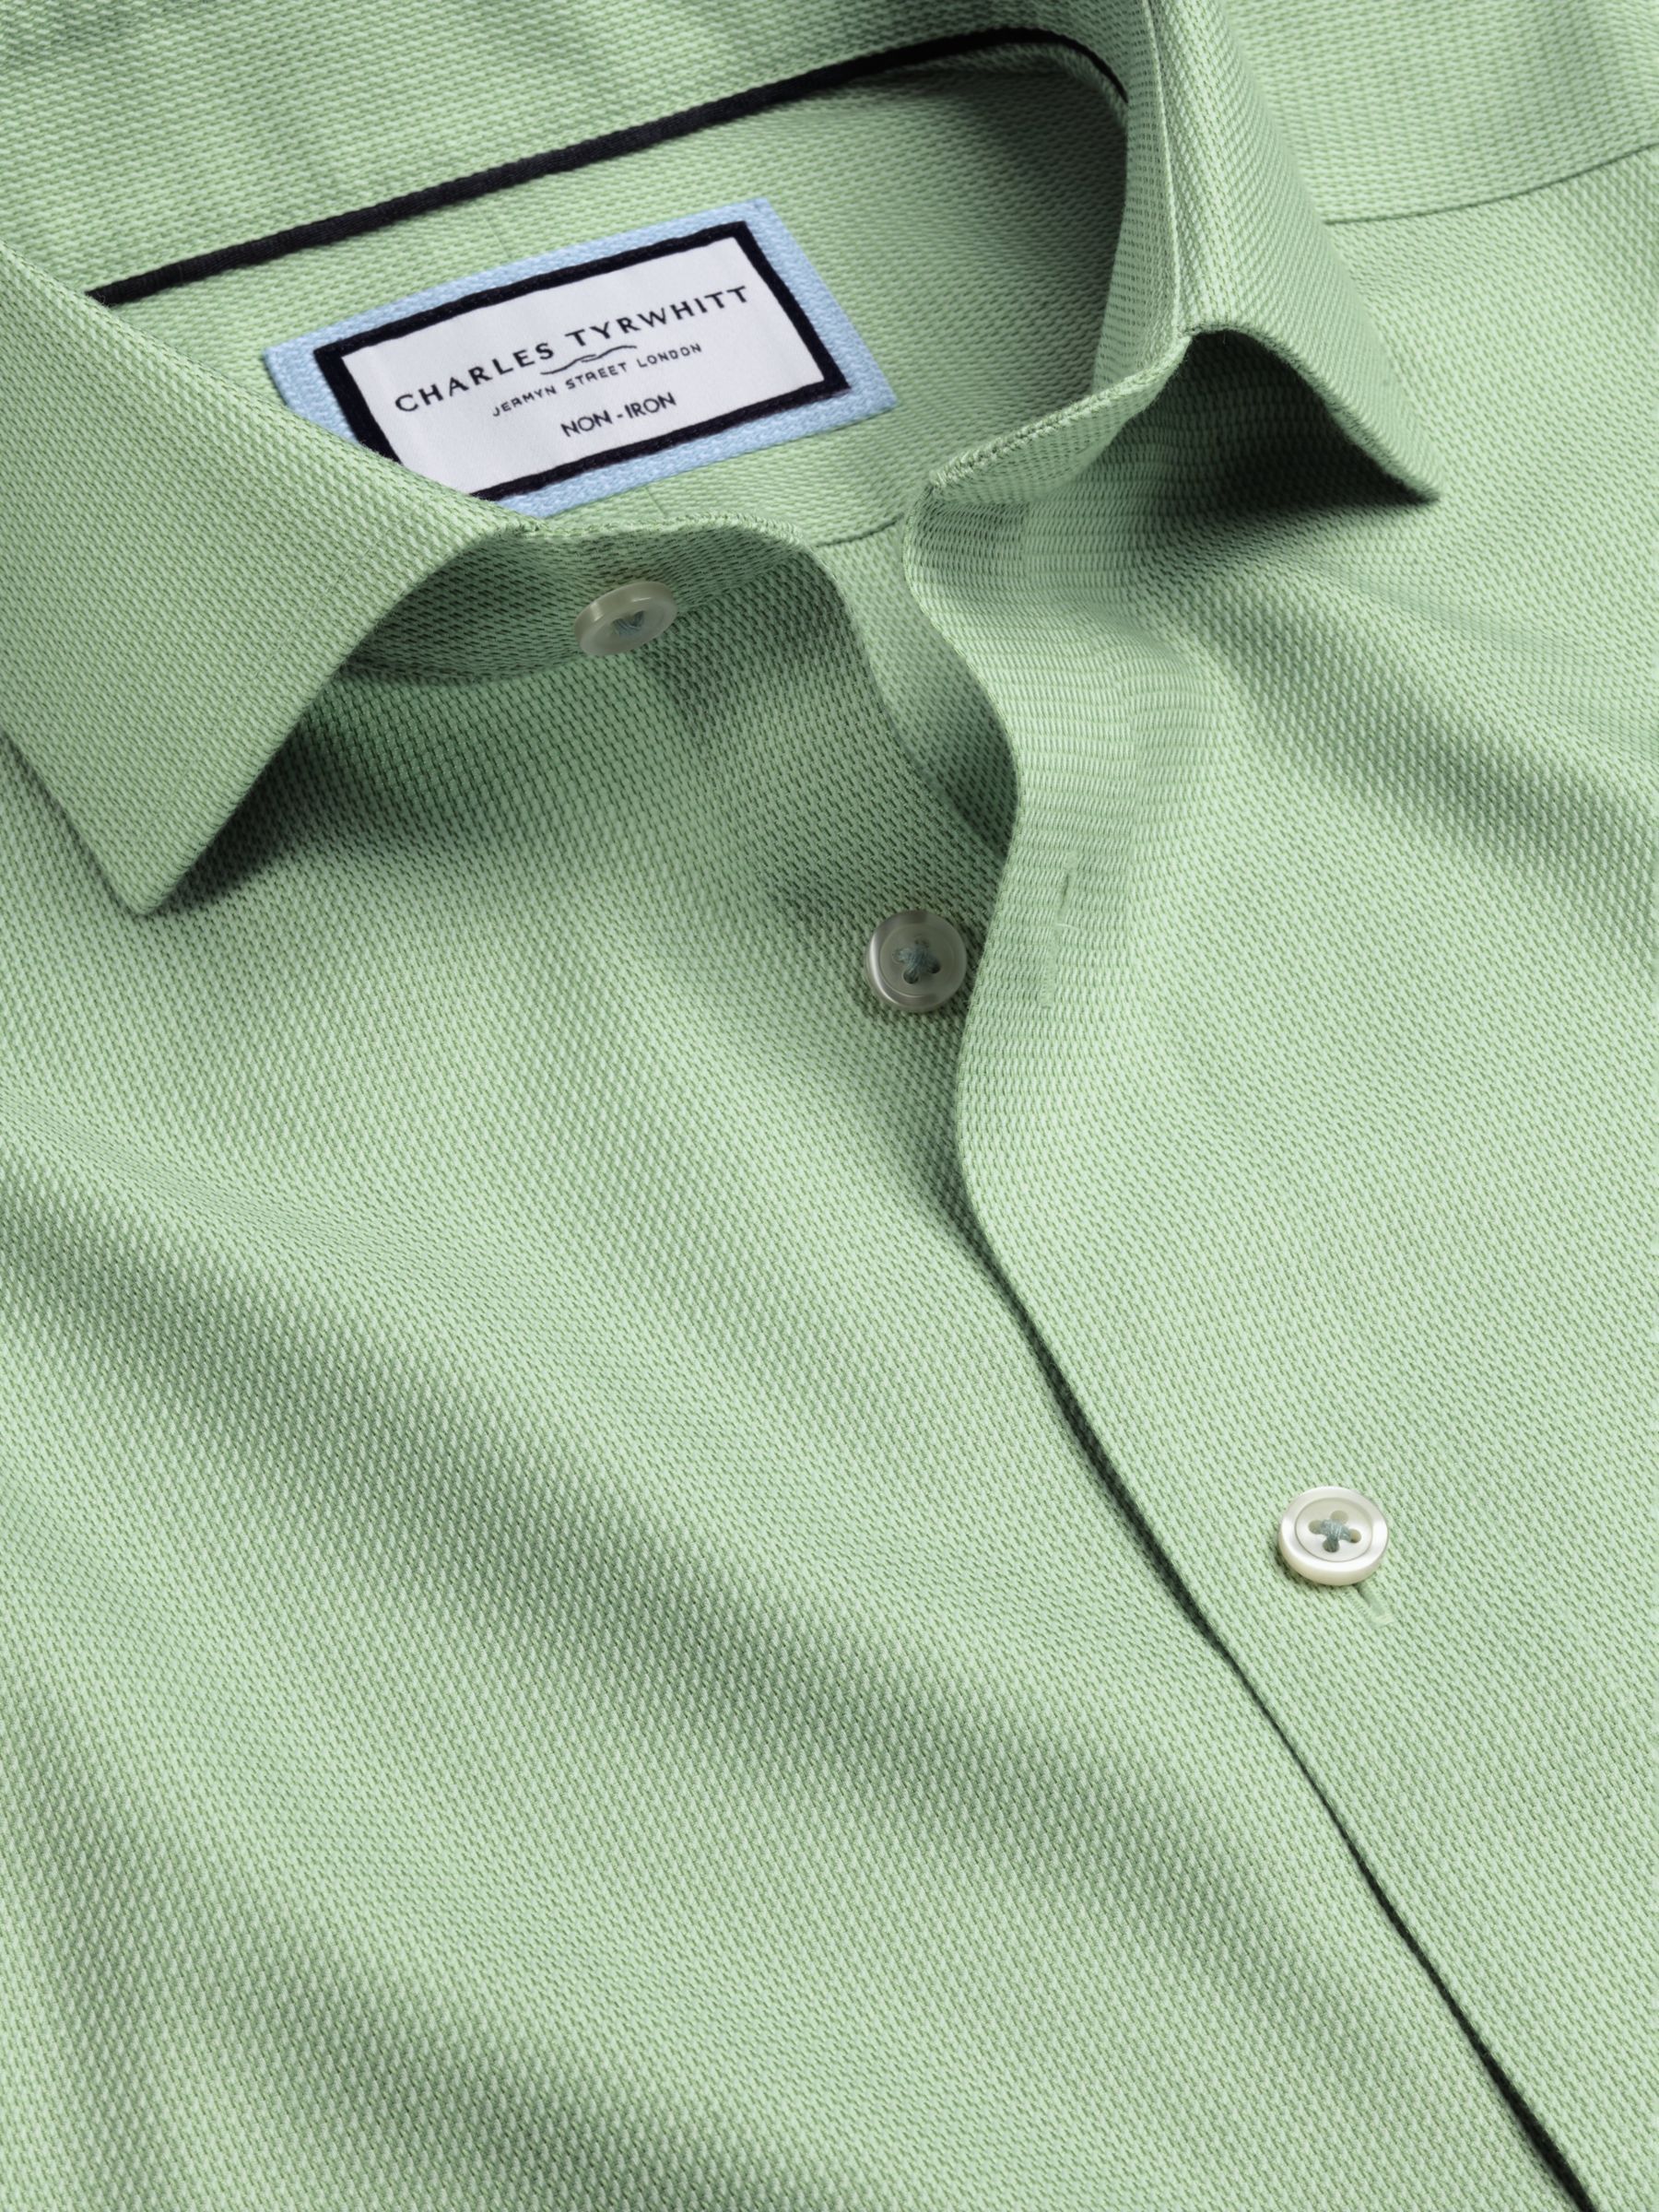 Charles Tyrwhitt Non-Iron Mayfair Textured Dobby Weave Shirt, Light Green, 14.5